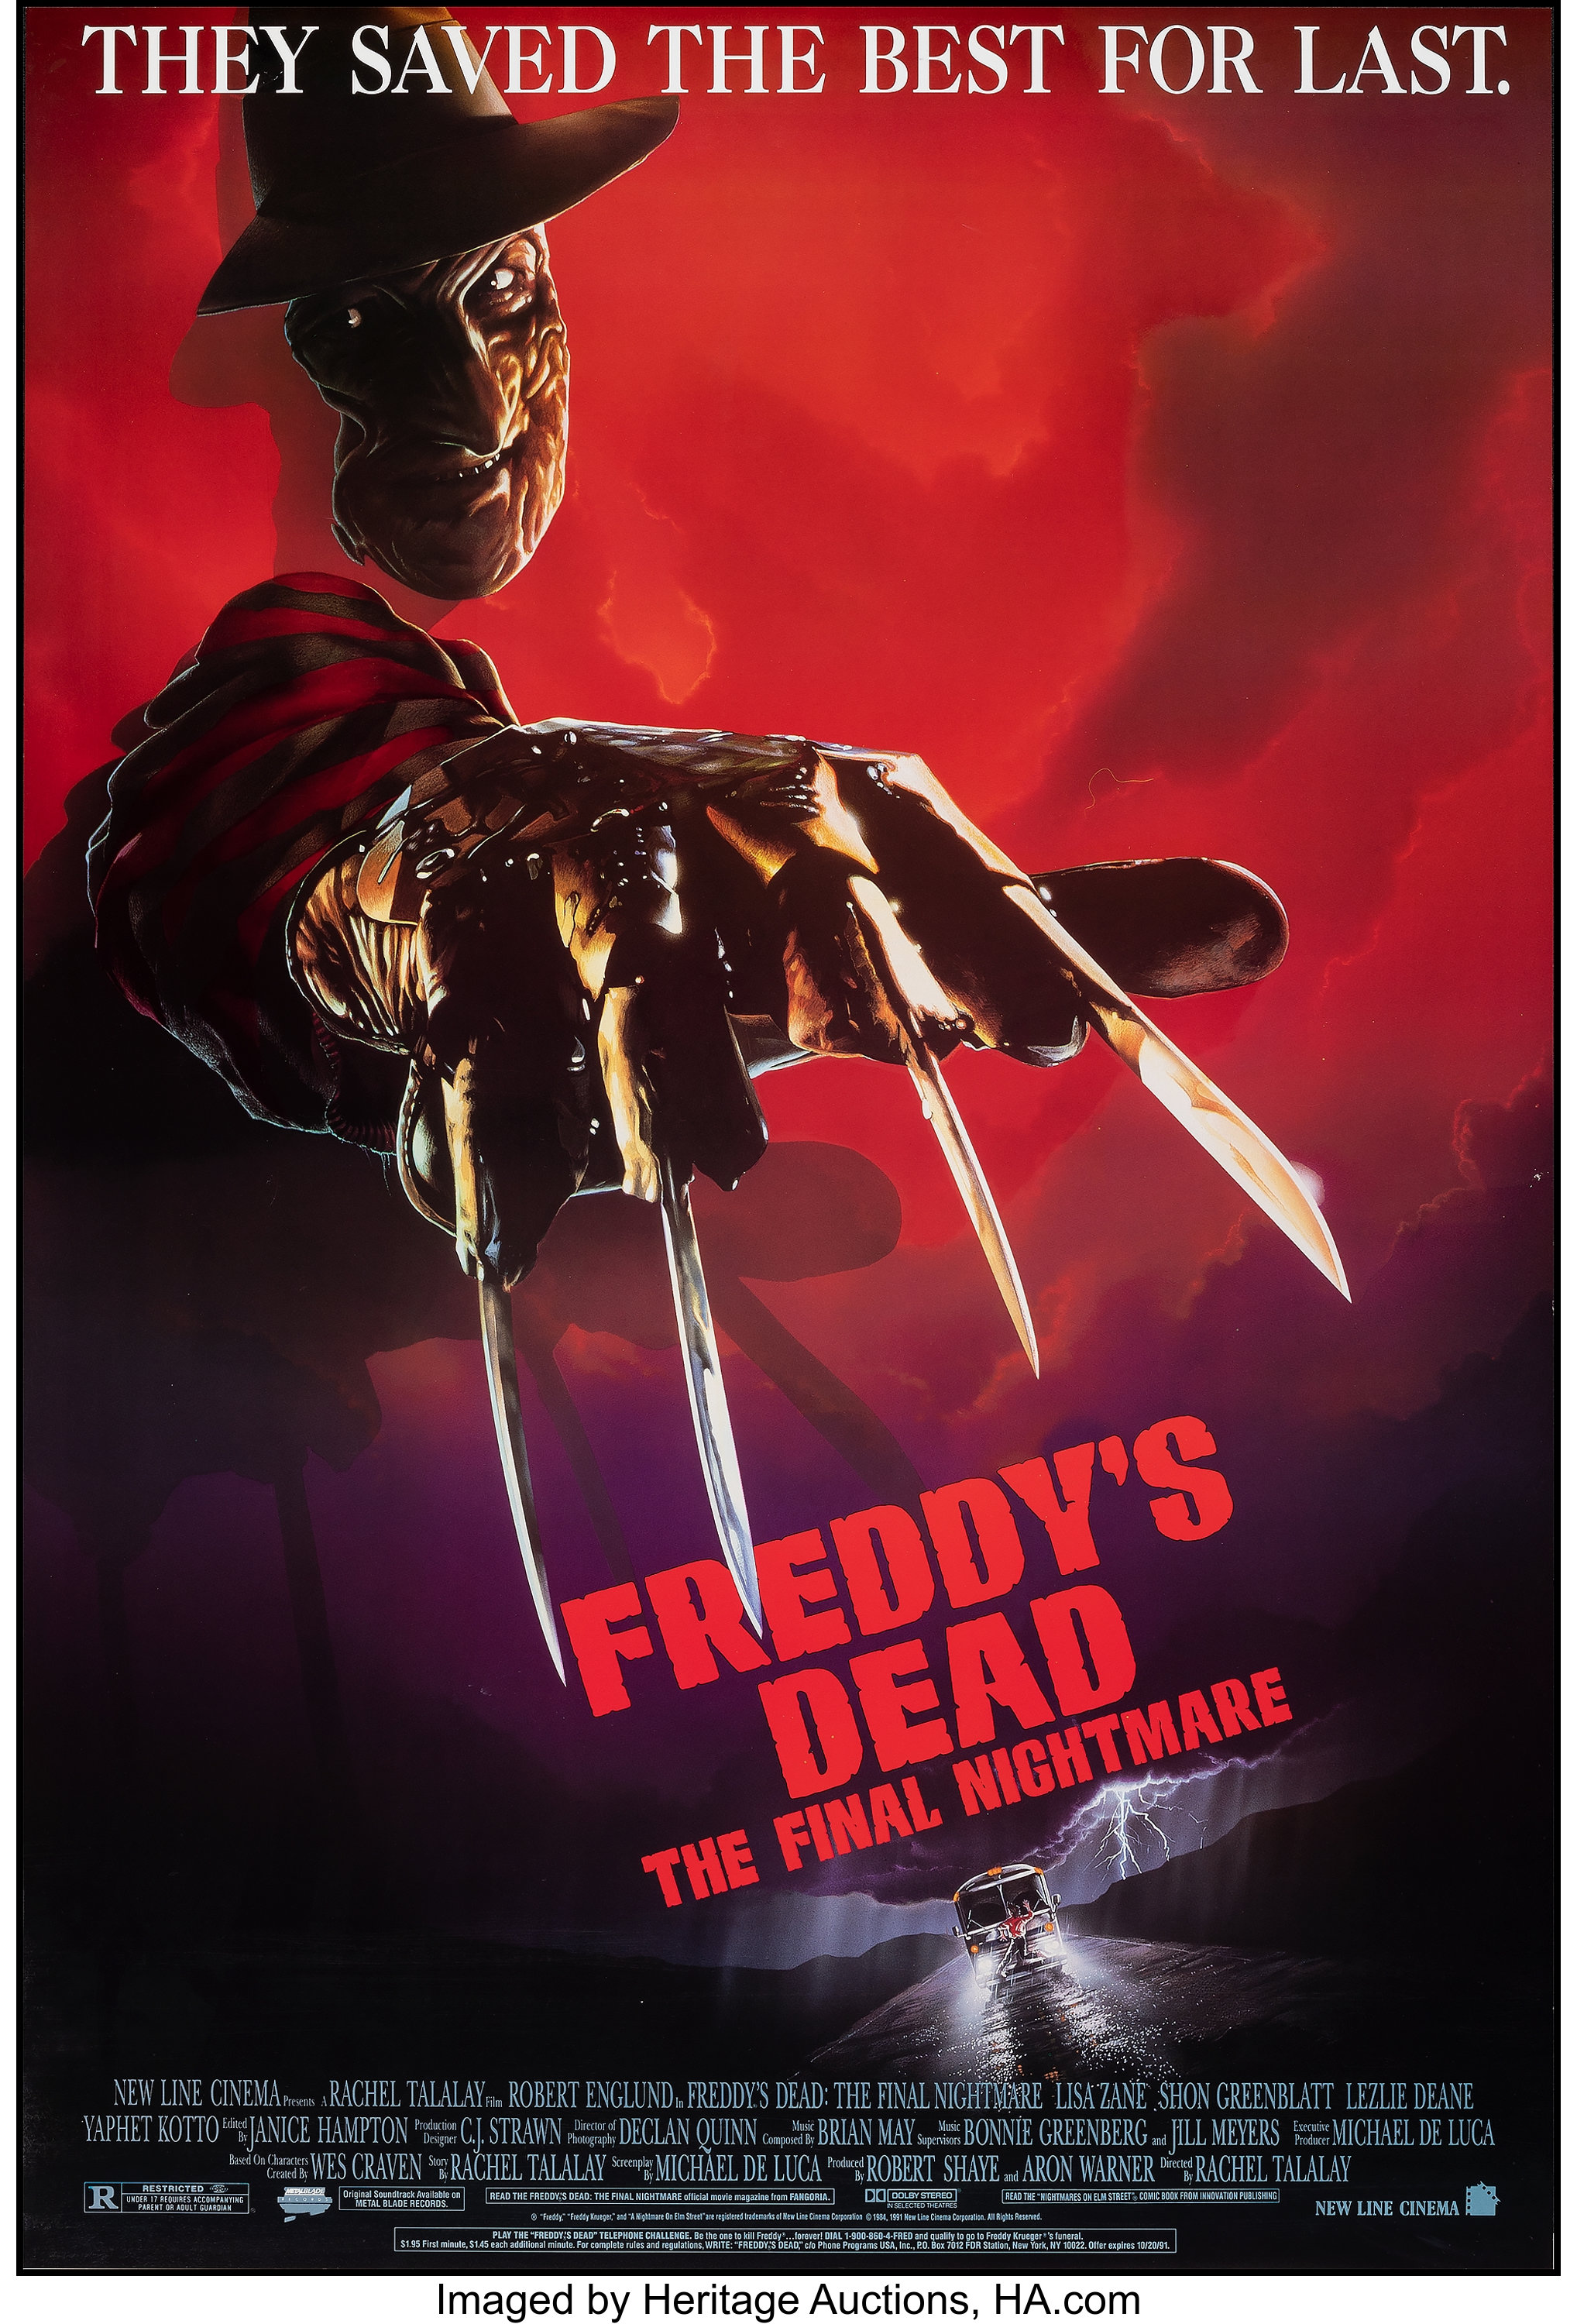  Freddy's Dead - The Final Nightmare [VHS] : Robert